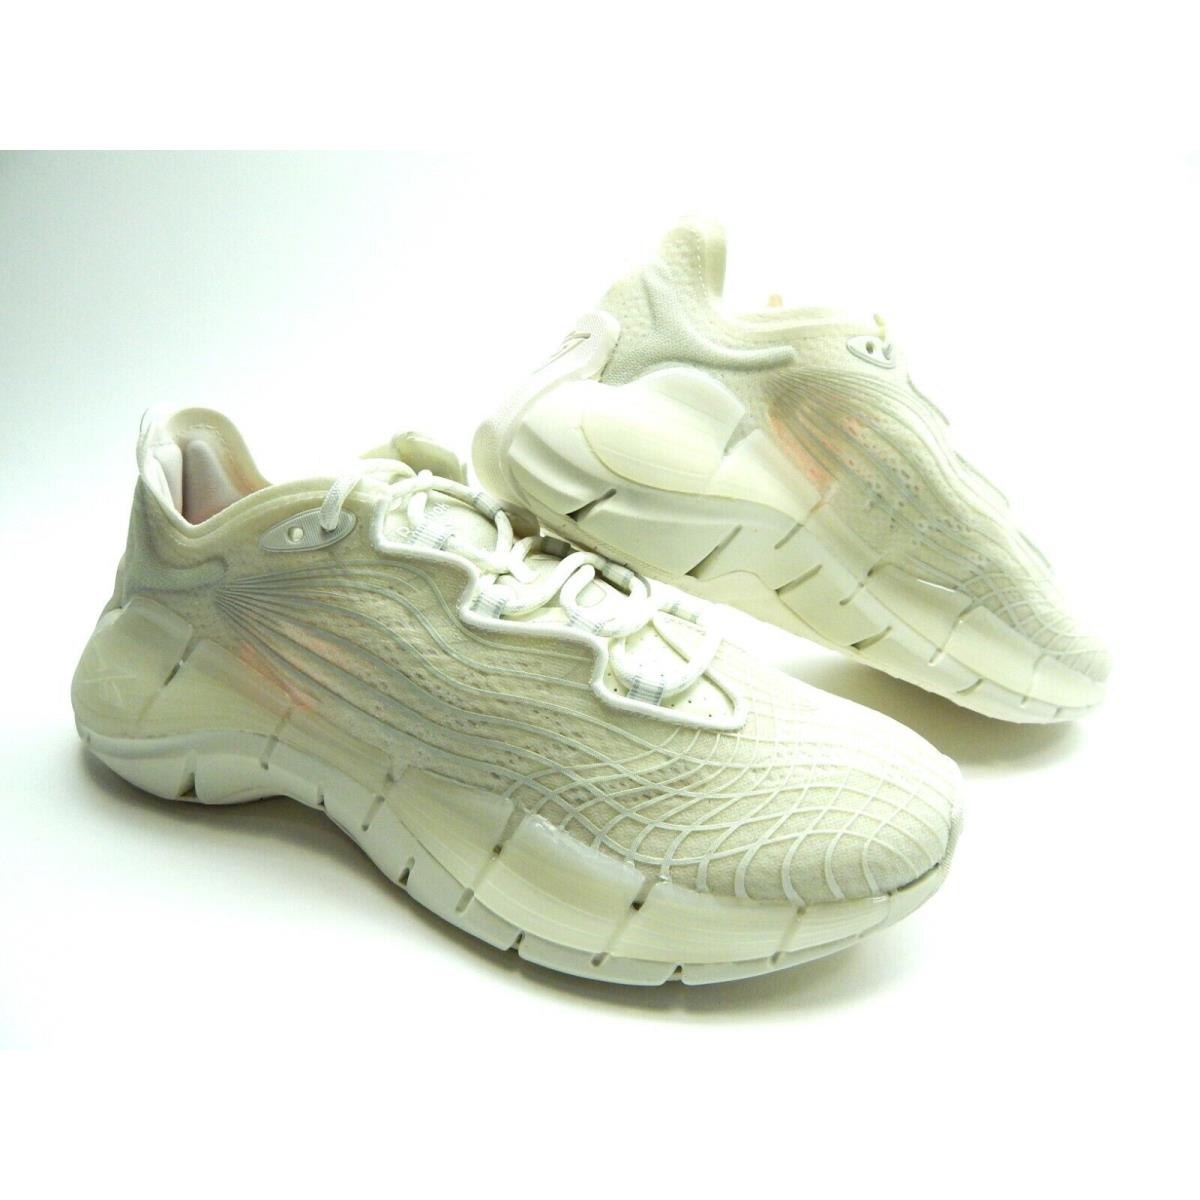 Reebok Zig Kinetica II FX9402 Chalk Pugrey 2 Athletic Women Shoes Size 8.5